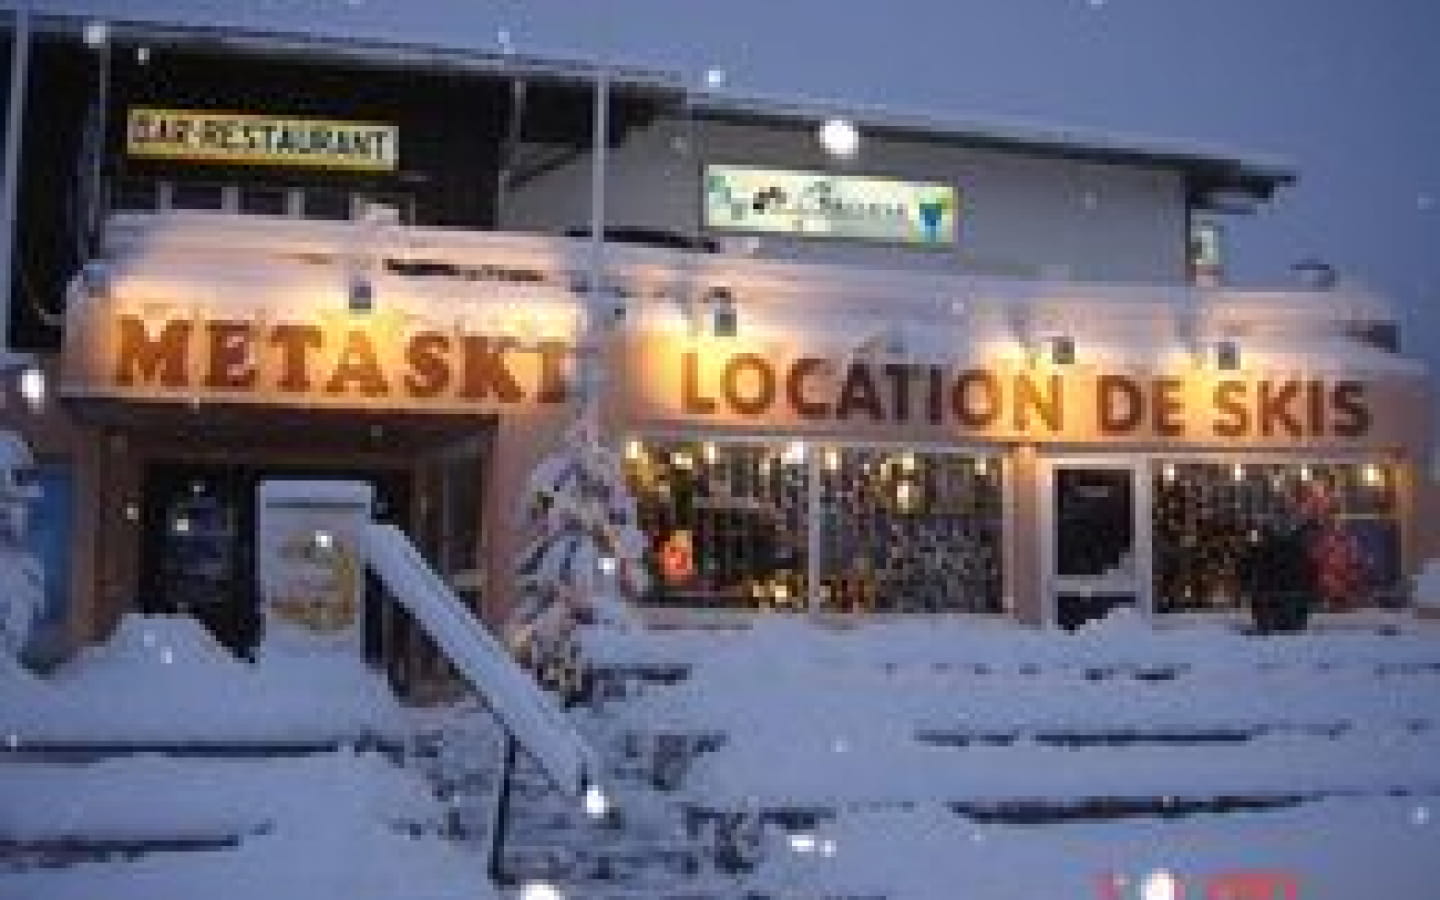 Métaski - Location de matériel de ski 